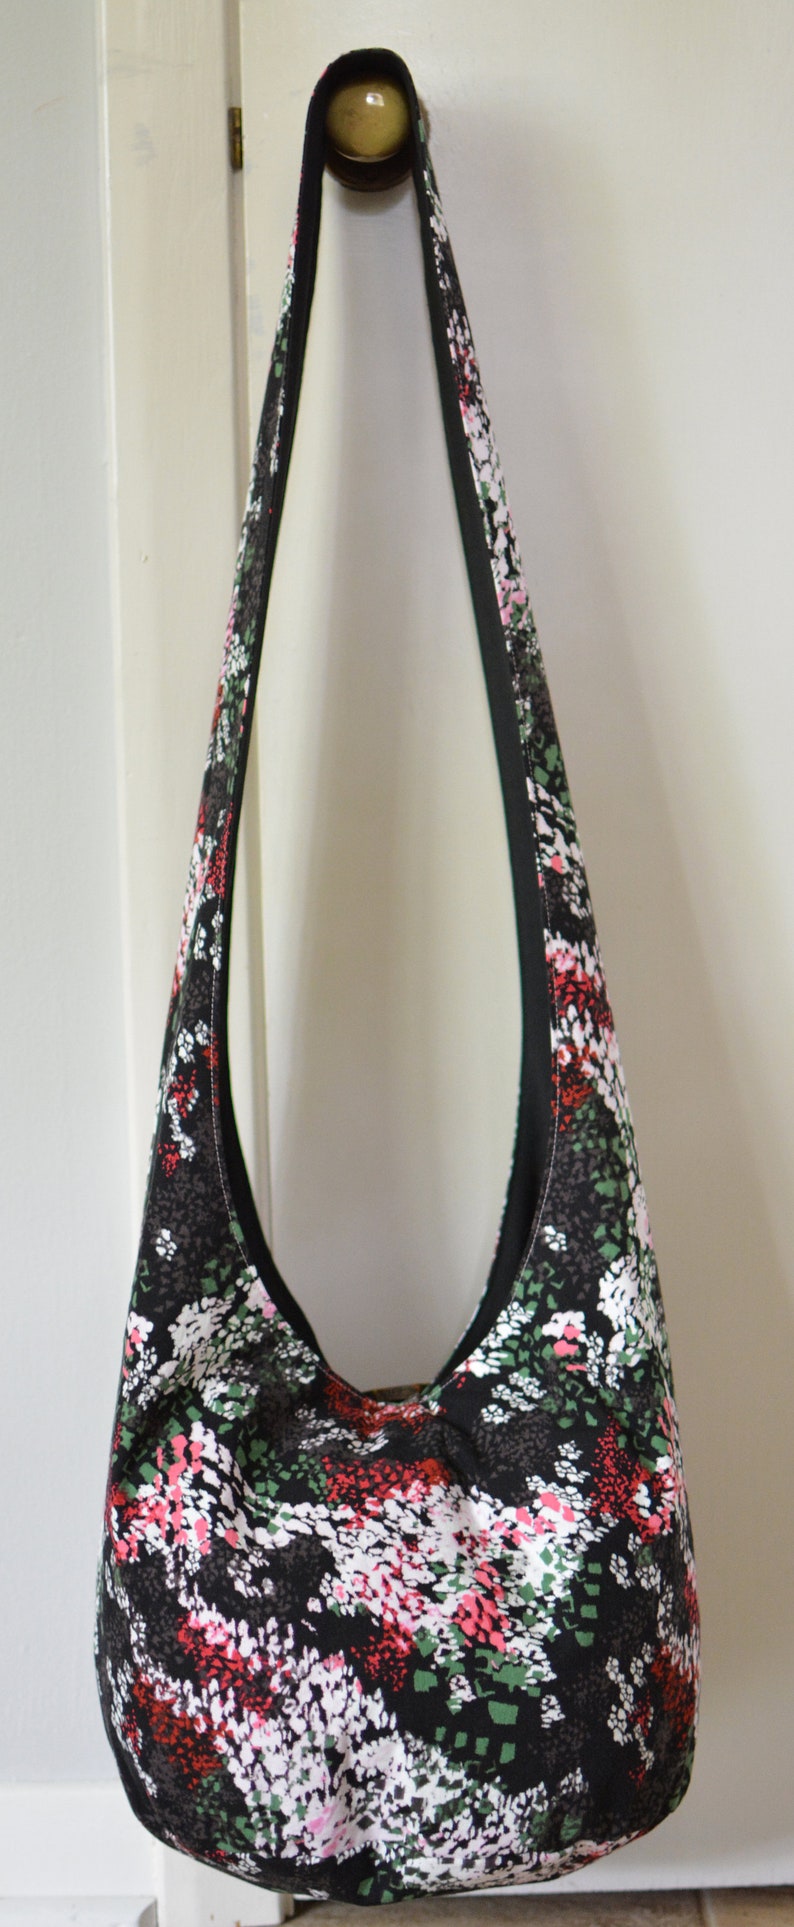 Floral Crossbody Bag Hobo Bag Fabric Boho Bag Cotton Hippie | Etsy